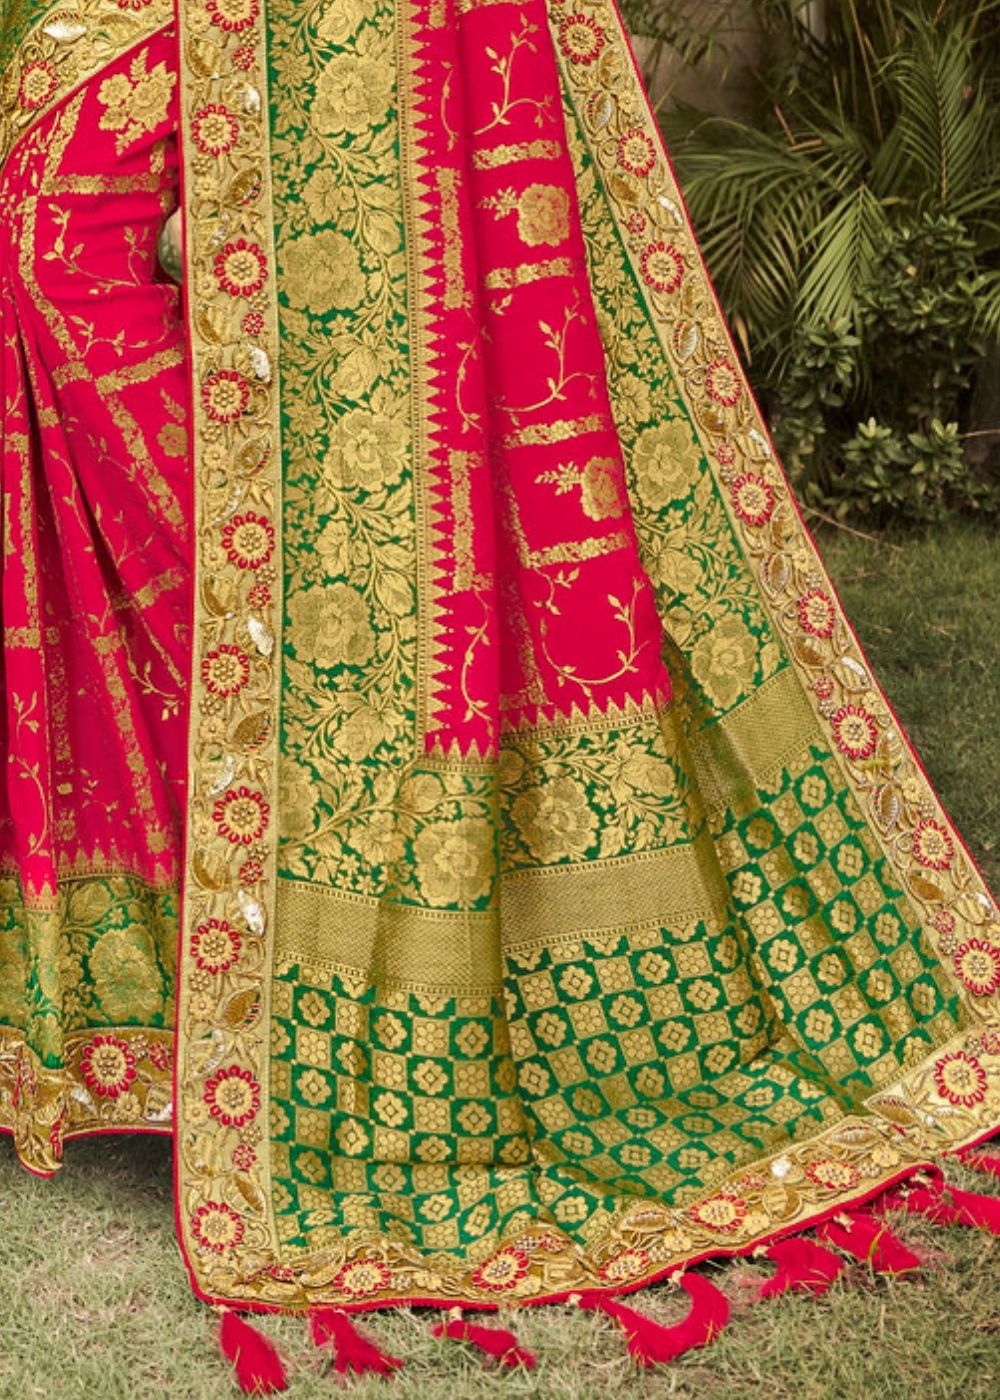 Ruby Pink and Green Banarasi Dola Silk Saree with Resham Embroidery, Zari and Moti work